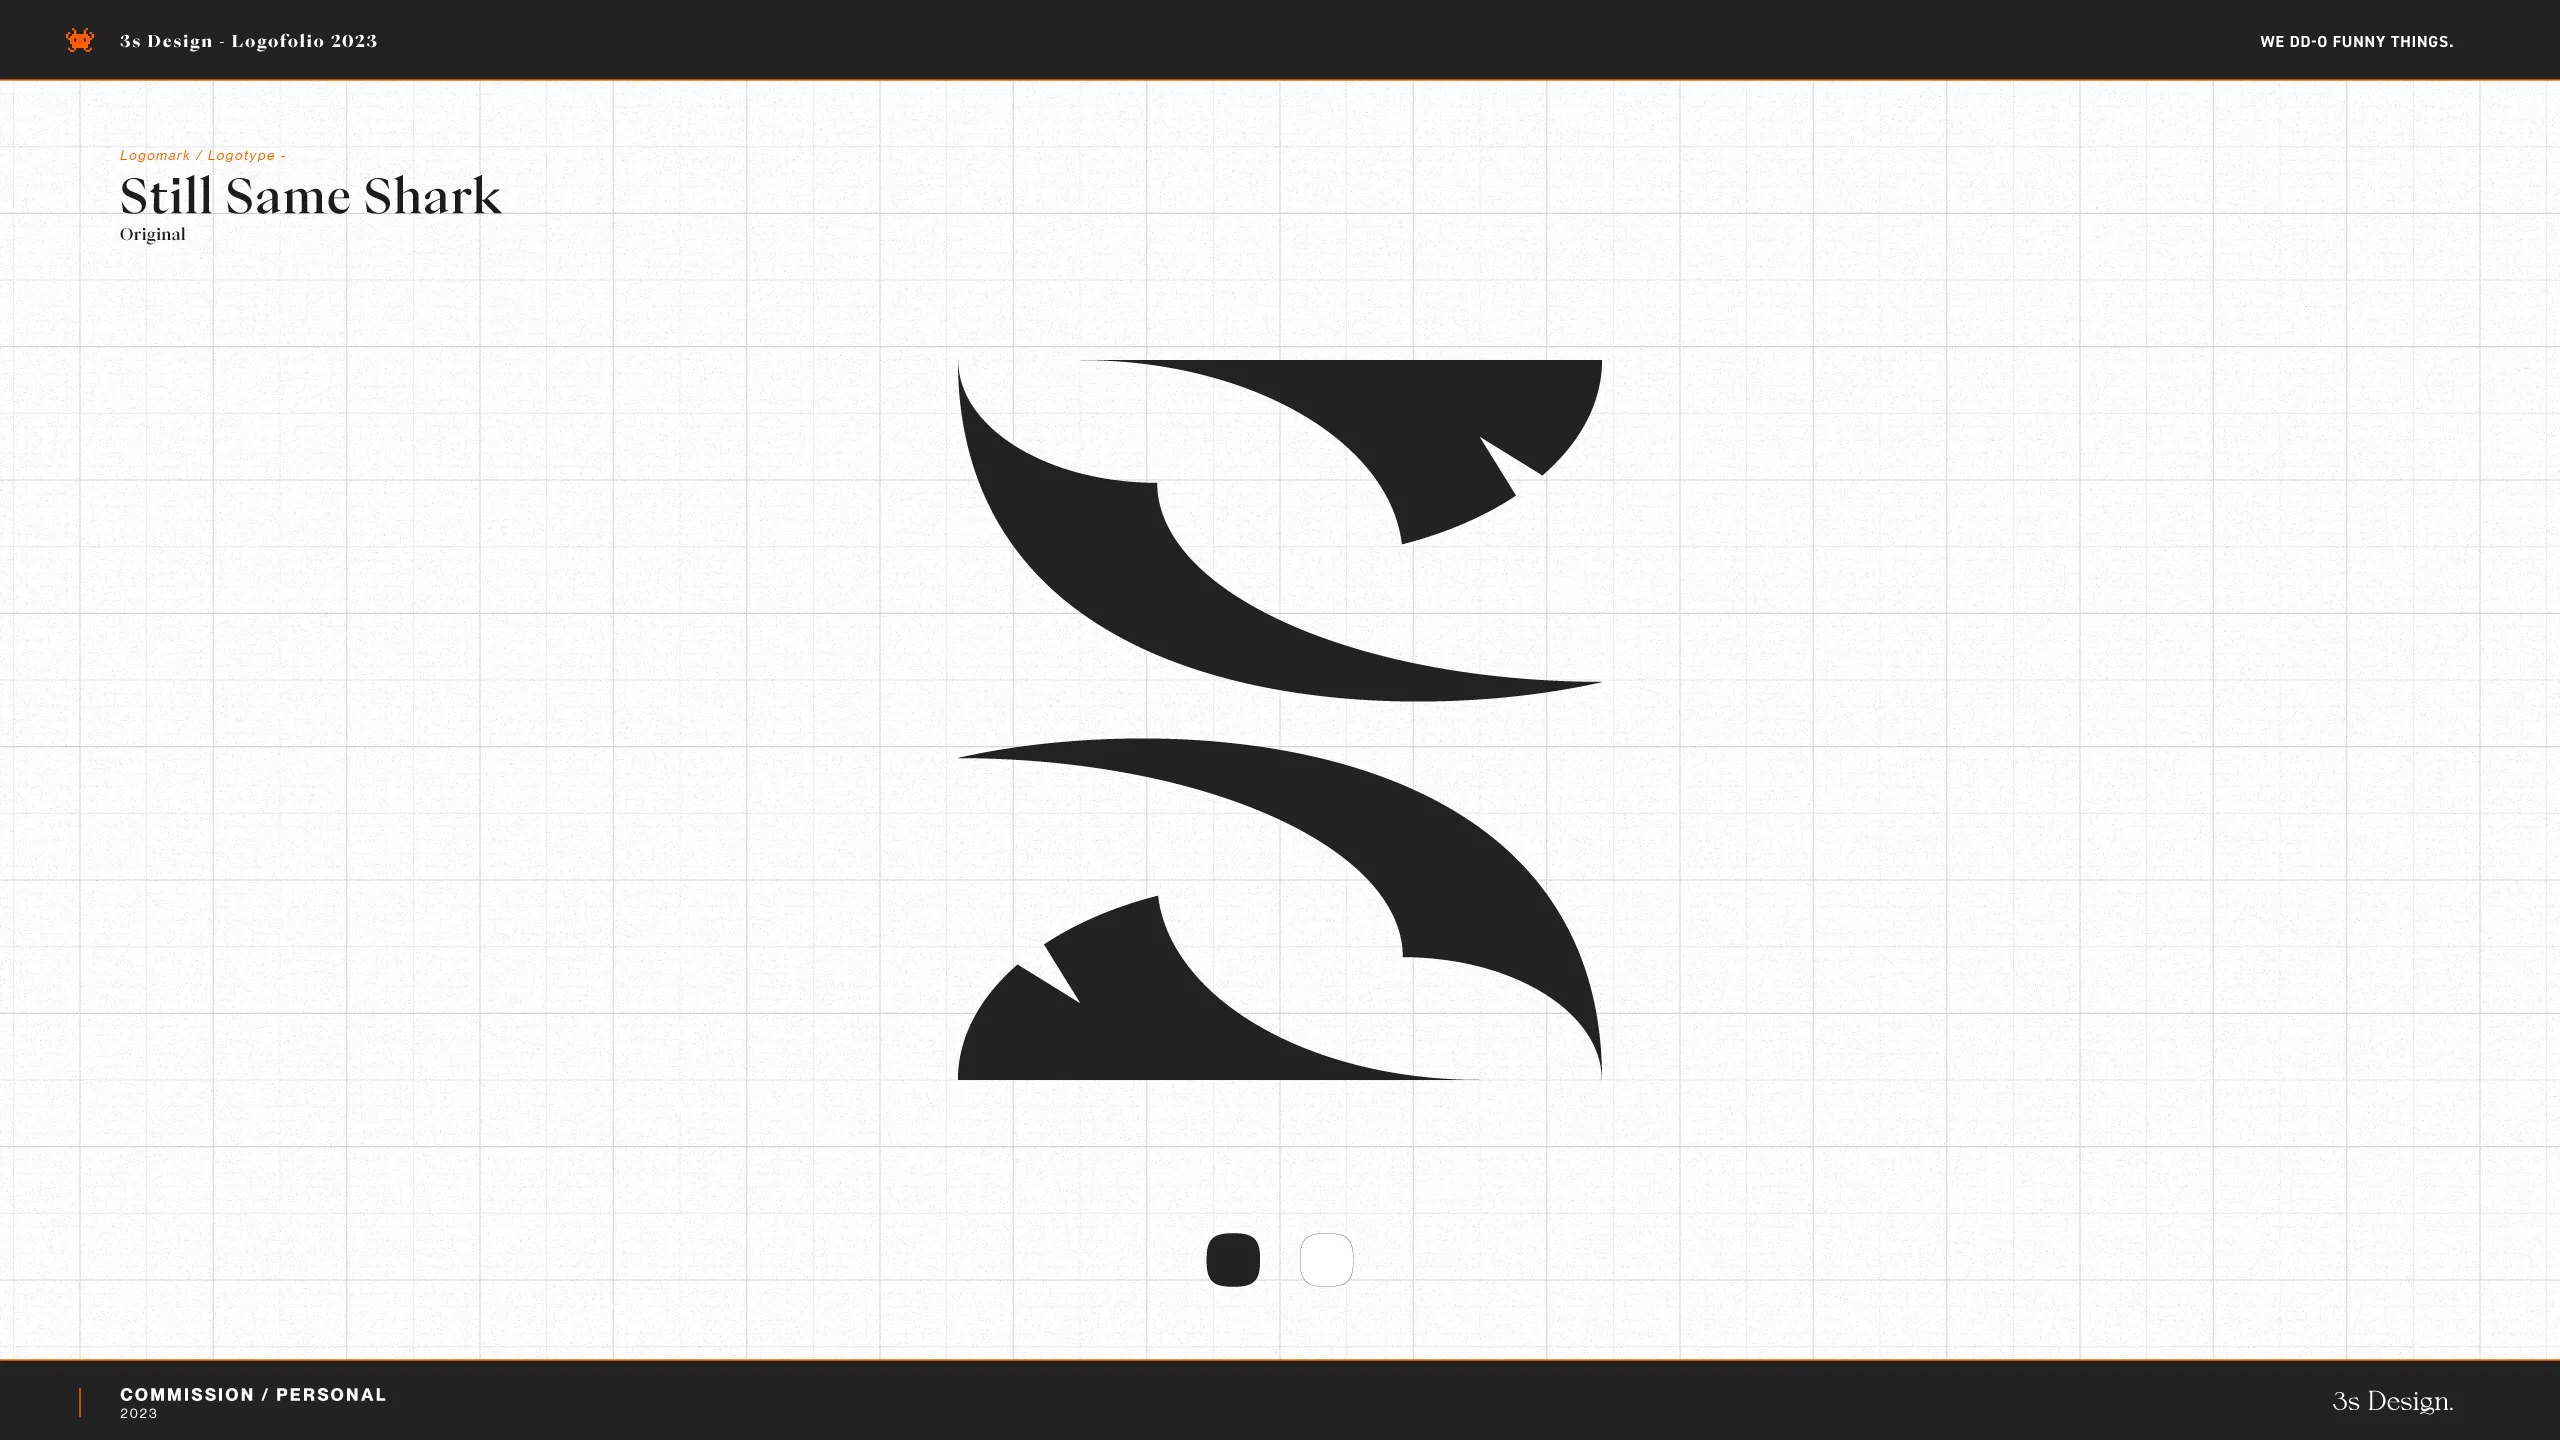 3s-Design-Logofolio-All-2023-v1.2_22_2560x-80